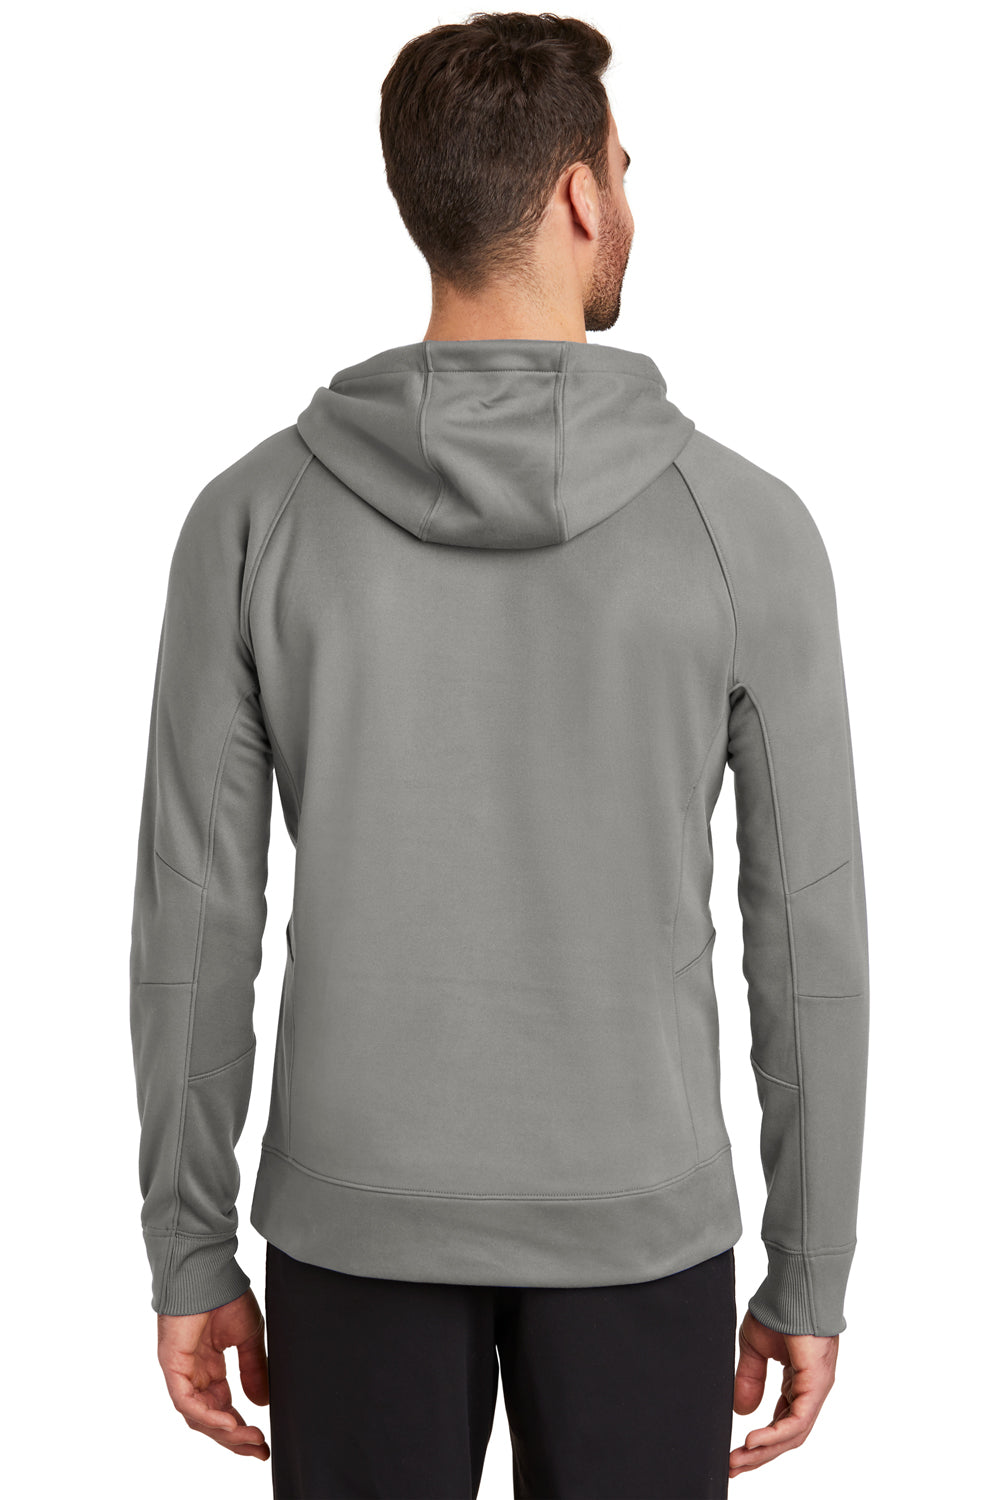 New Era NEA520 Mens Venue Fleece Hooded Sweatshirt Hoodie Shadow Grey Back